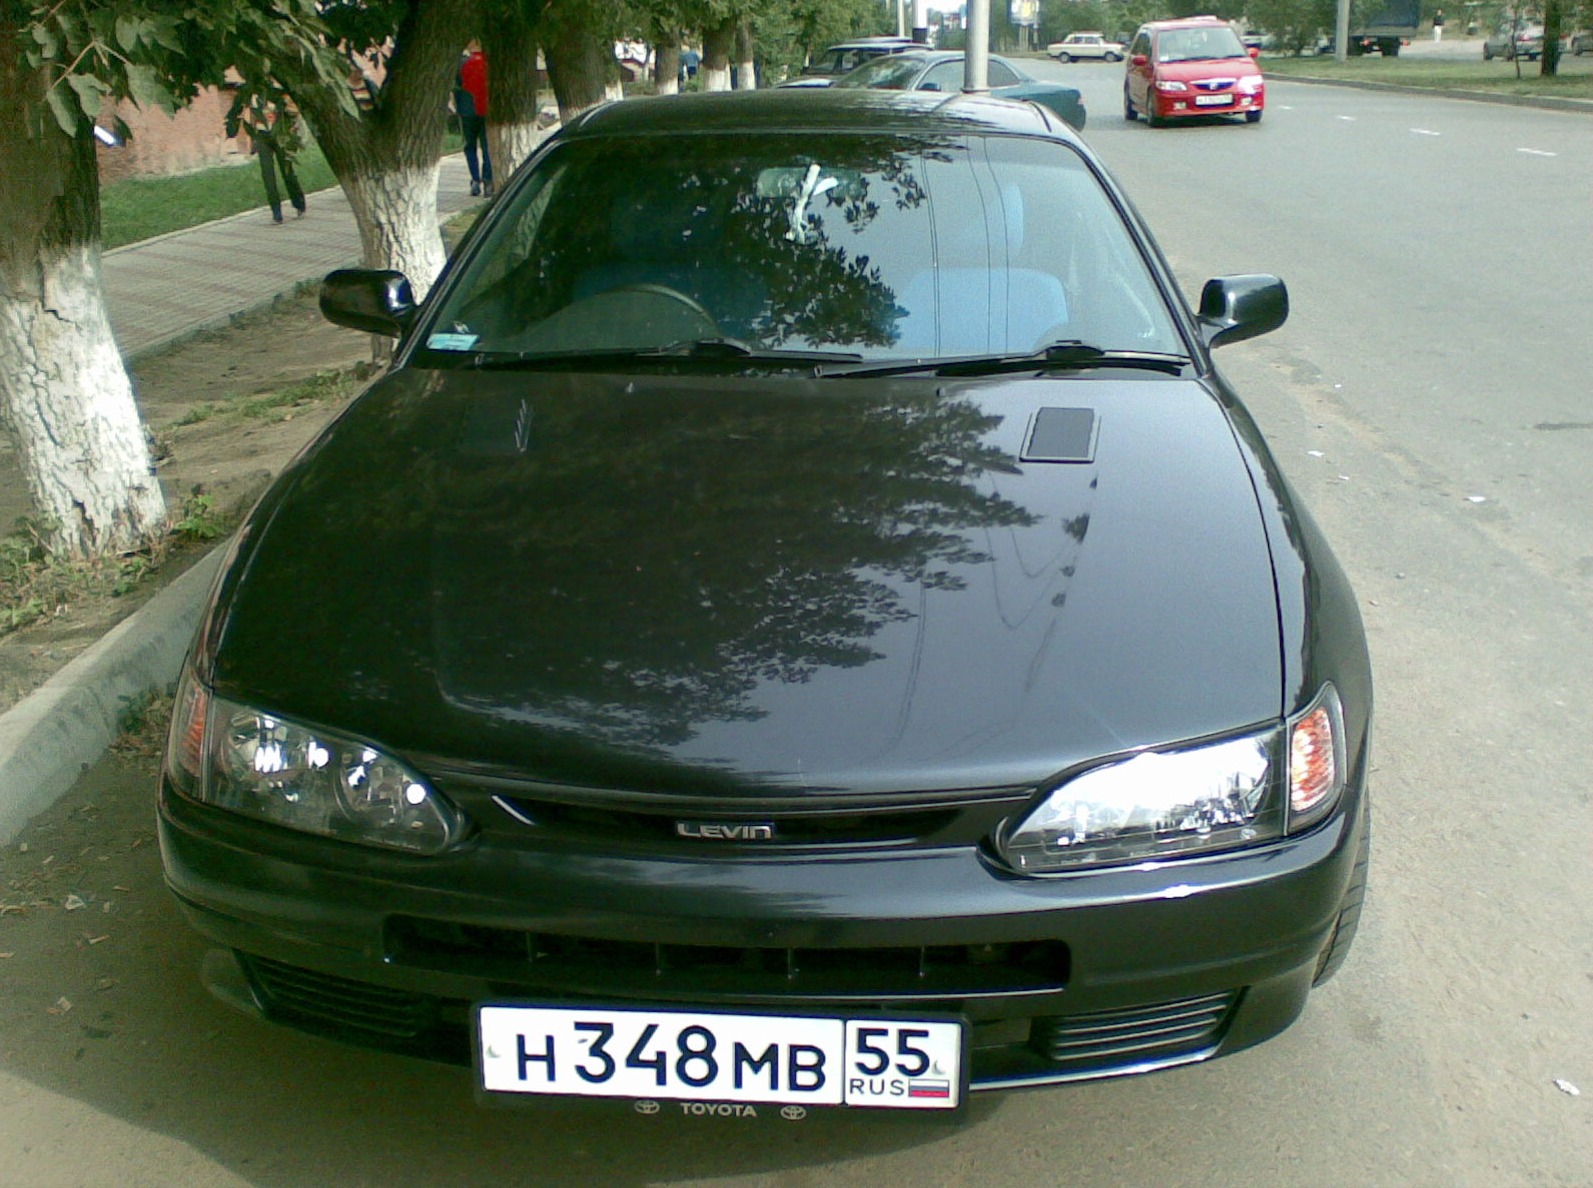      Toyota Corolla Levin 16 1996